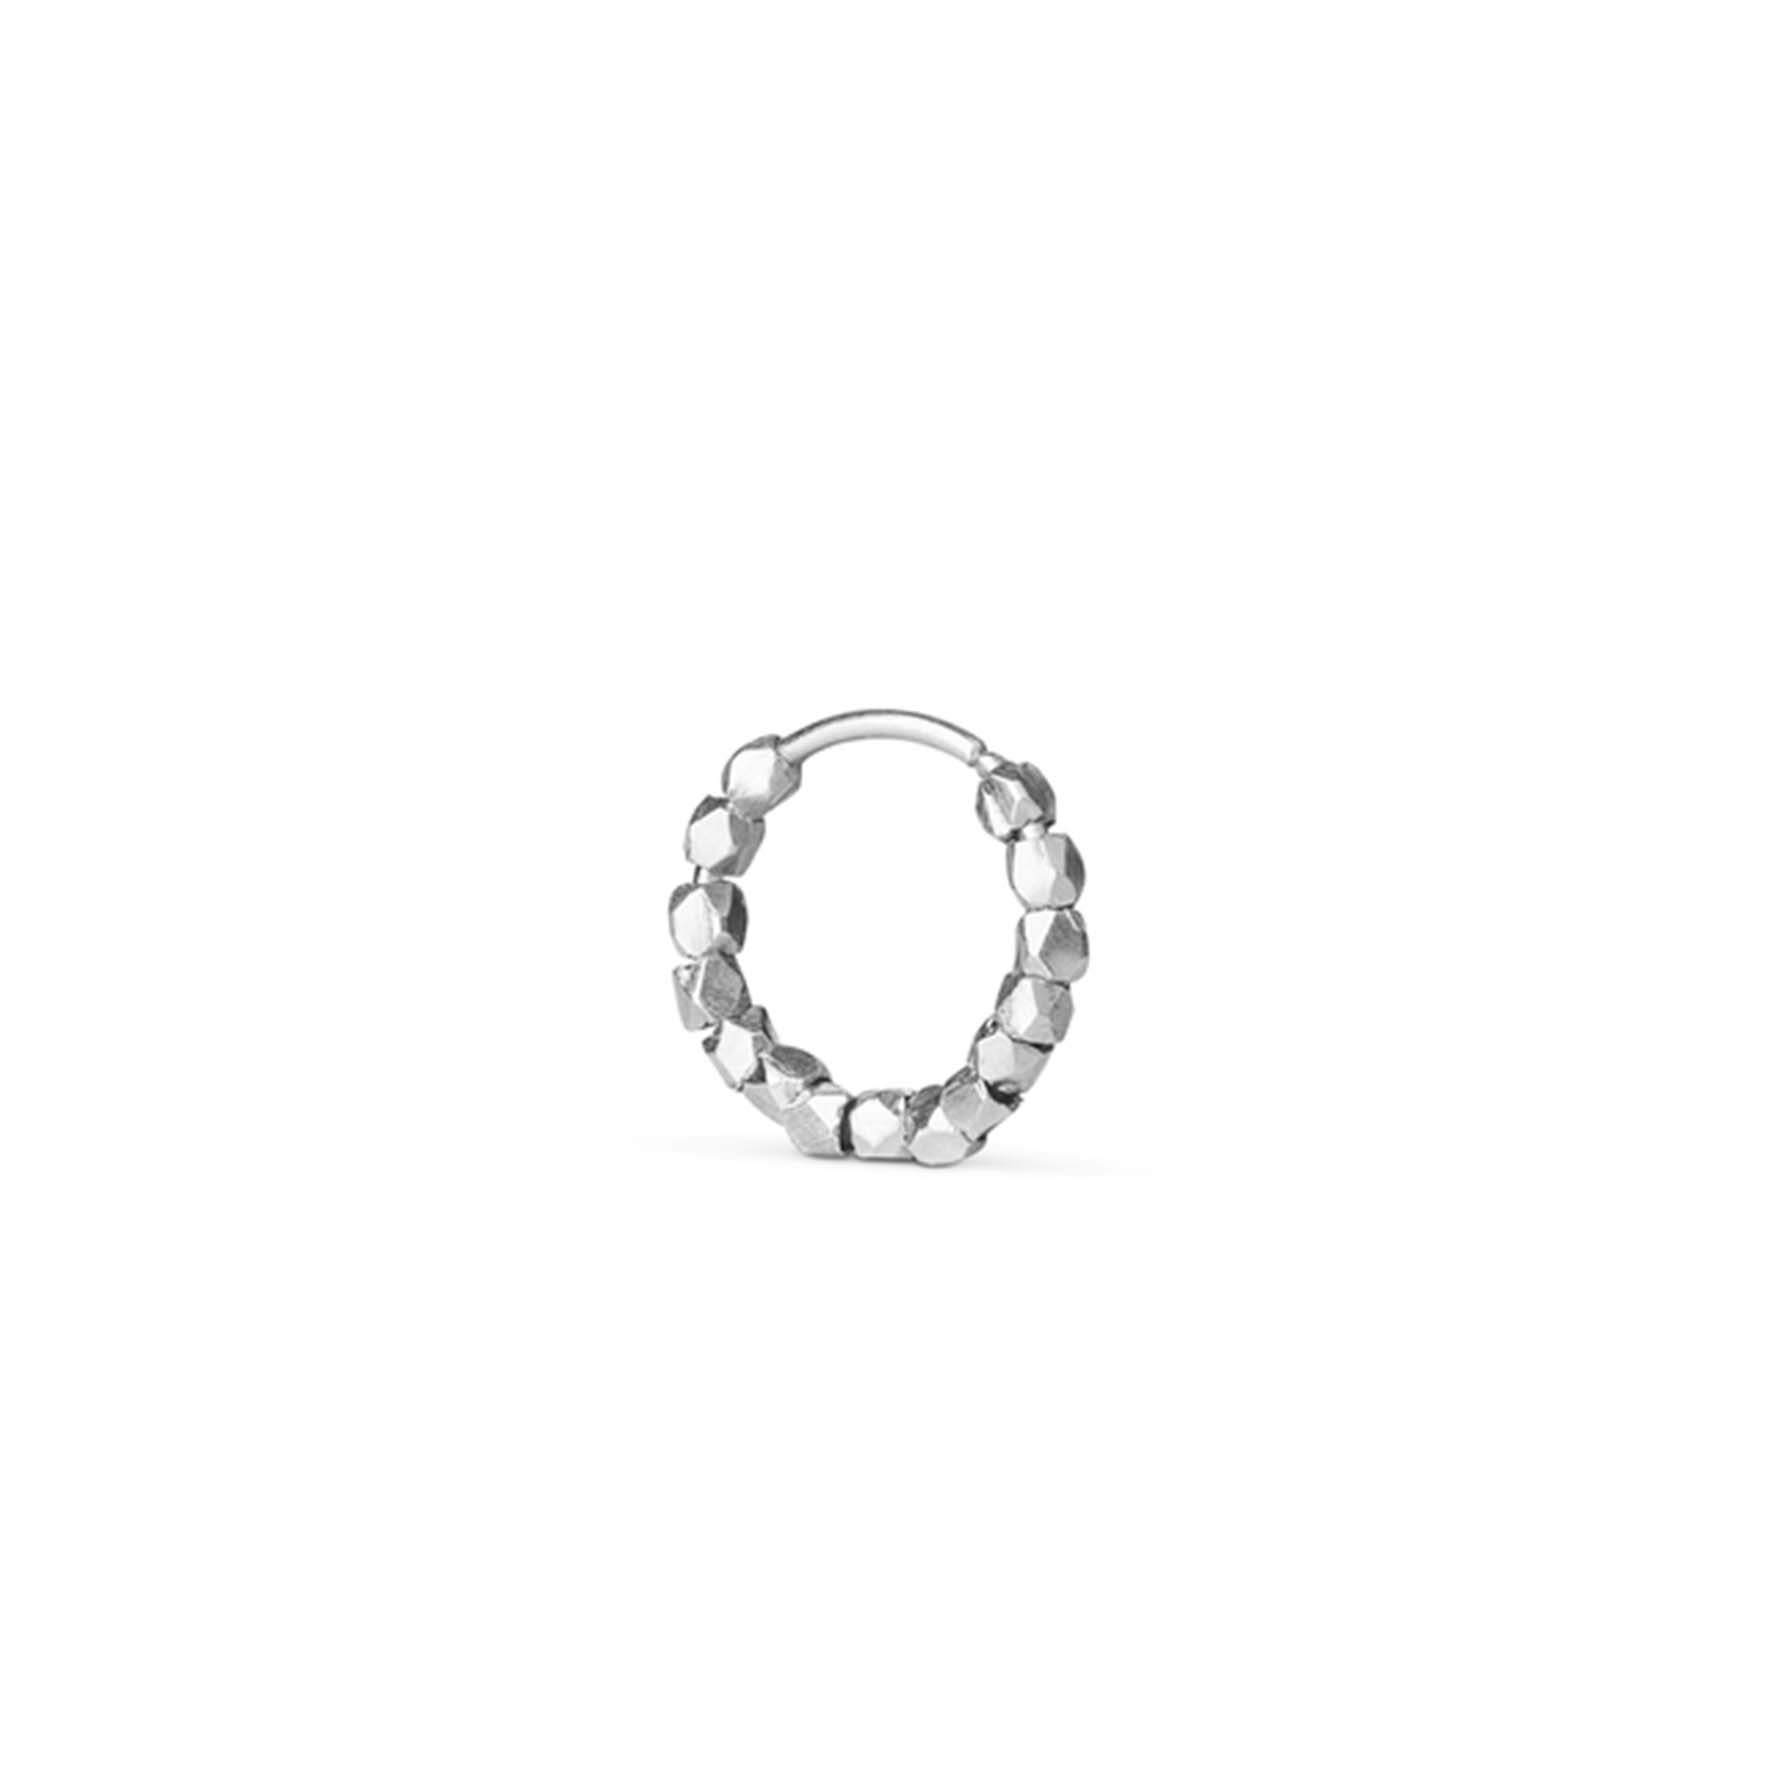 Bead Twist Earring fra Jane Kønig i Sølv Sterling 925